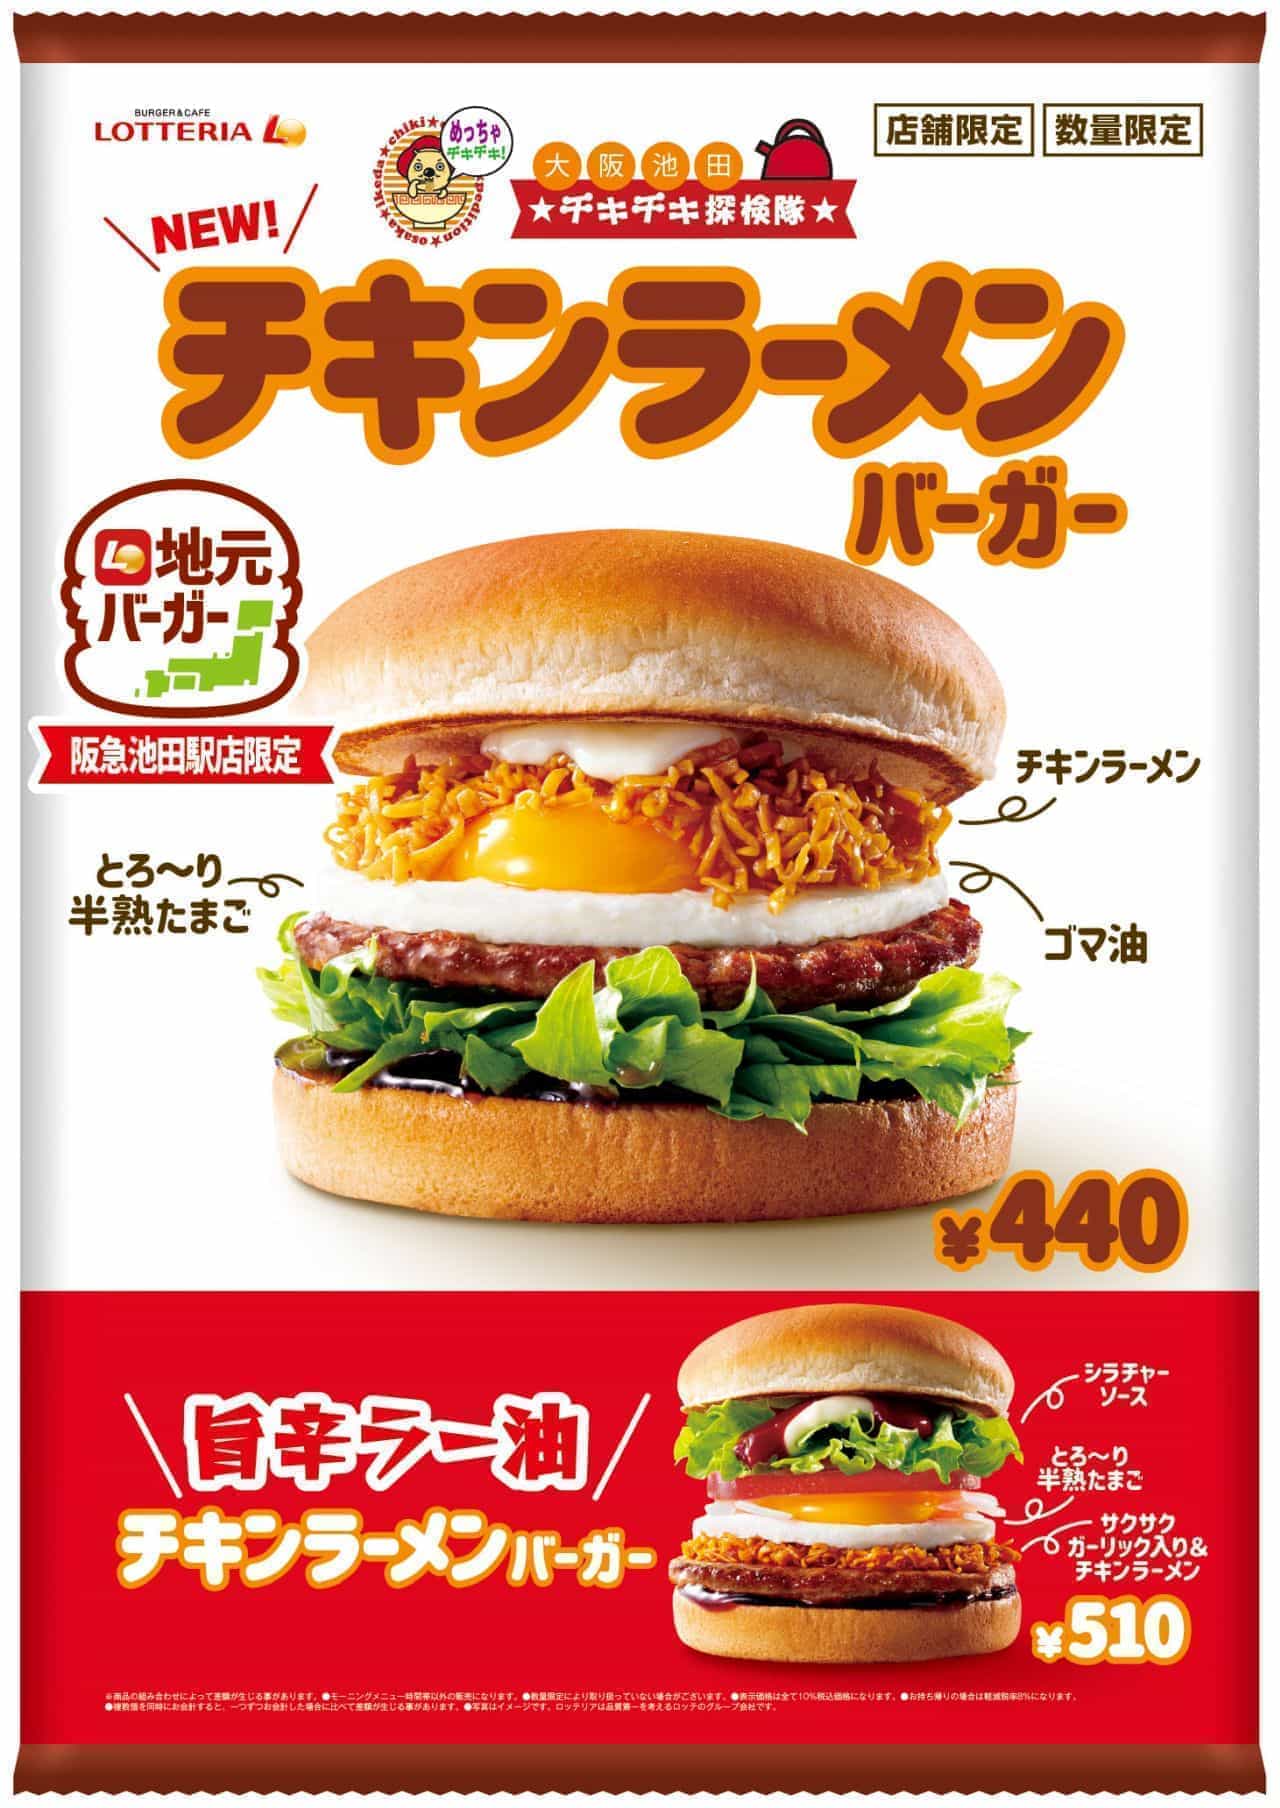 Lotteria "Chicken Ramen Burger" and "Umami Spicy Ramen Chicken Ramen Burger".